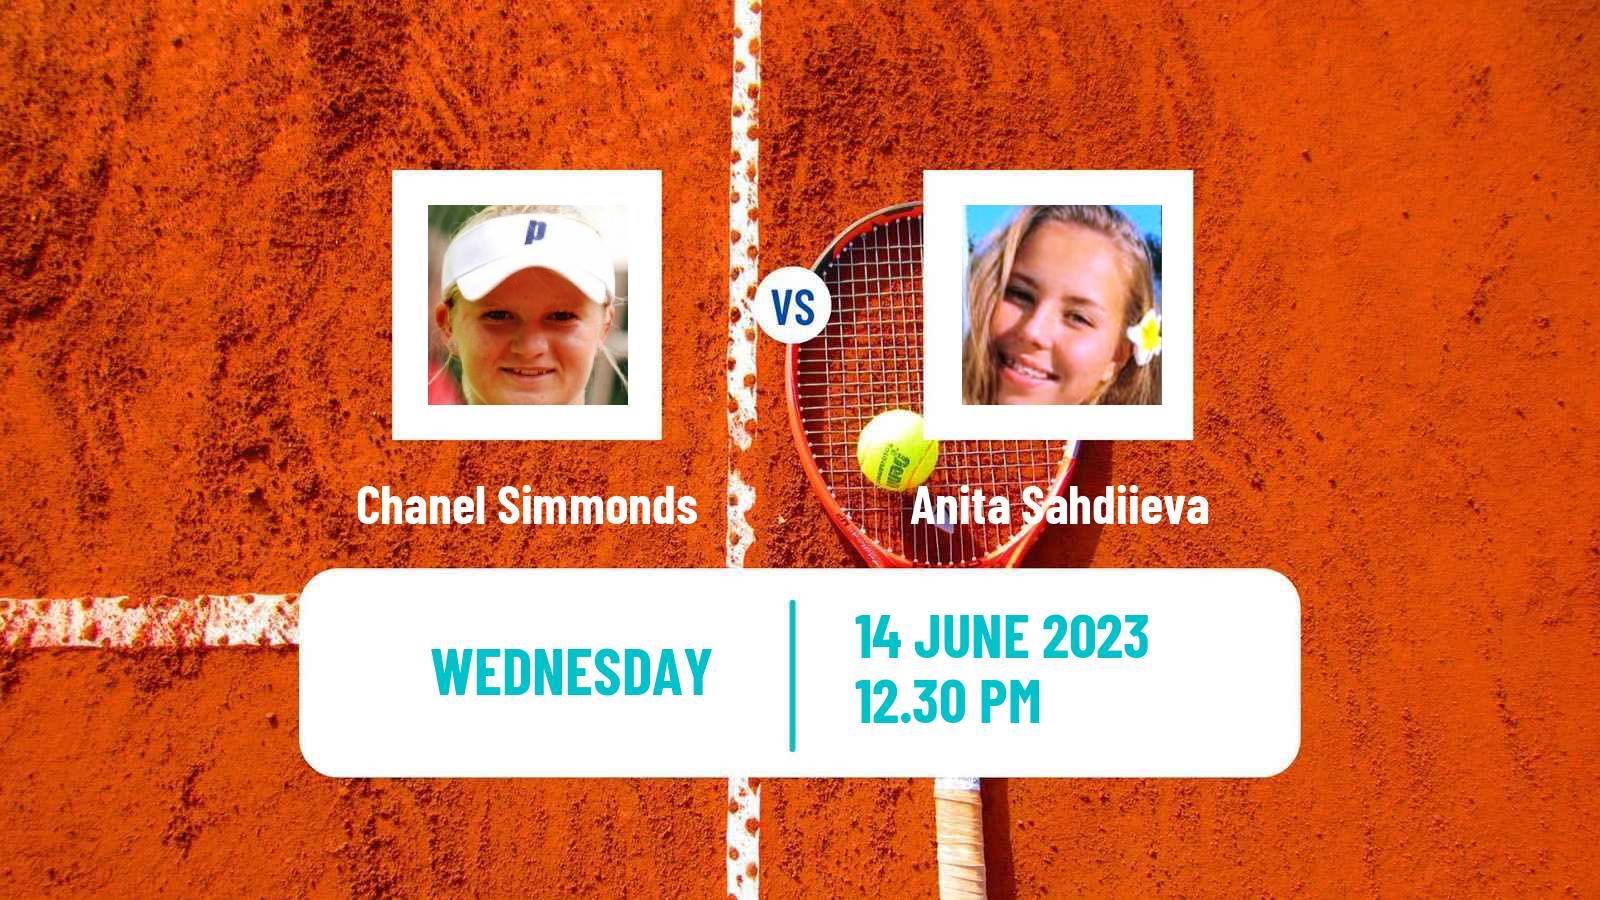 Tennis ITF W15 San Diego Ca 2 Women Chanel Simmonds - Anita Sahdiieva